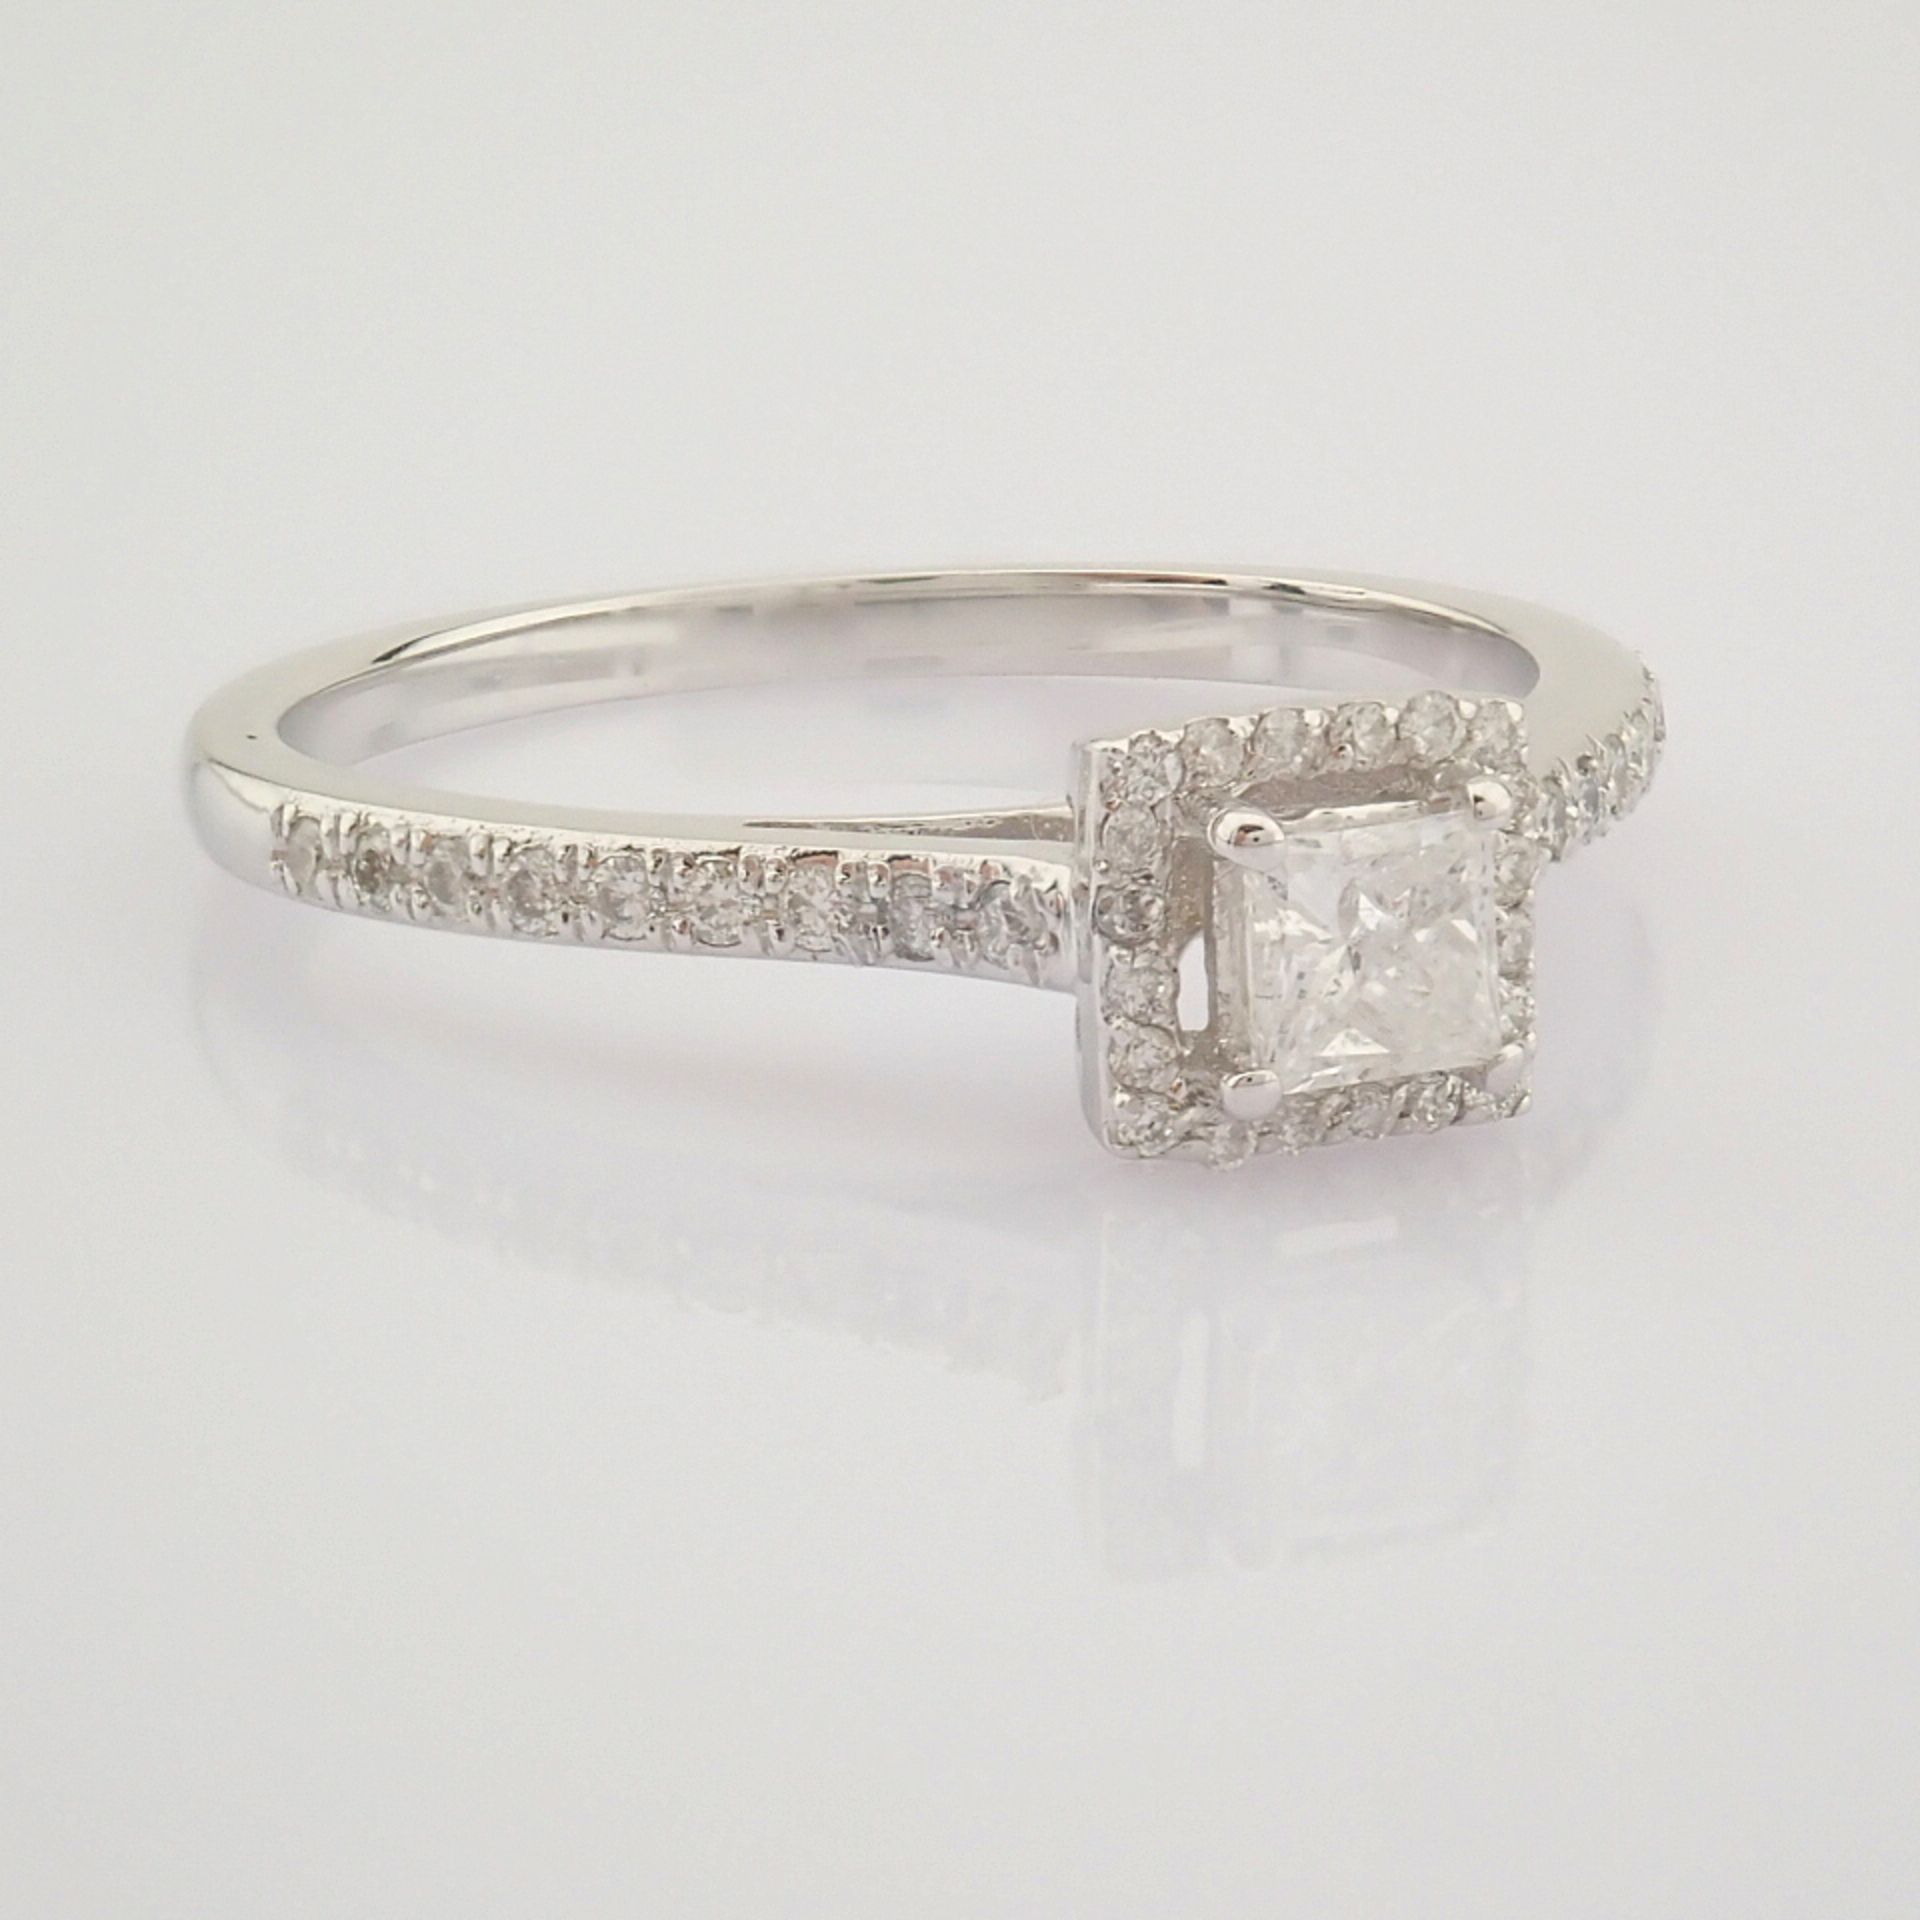 Certificated 14K White Gold Princess Cut Diamond & Diamond Ring (Total 0.37 ct Stone) - Image 8 of 10